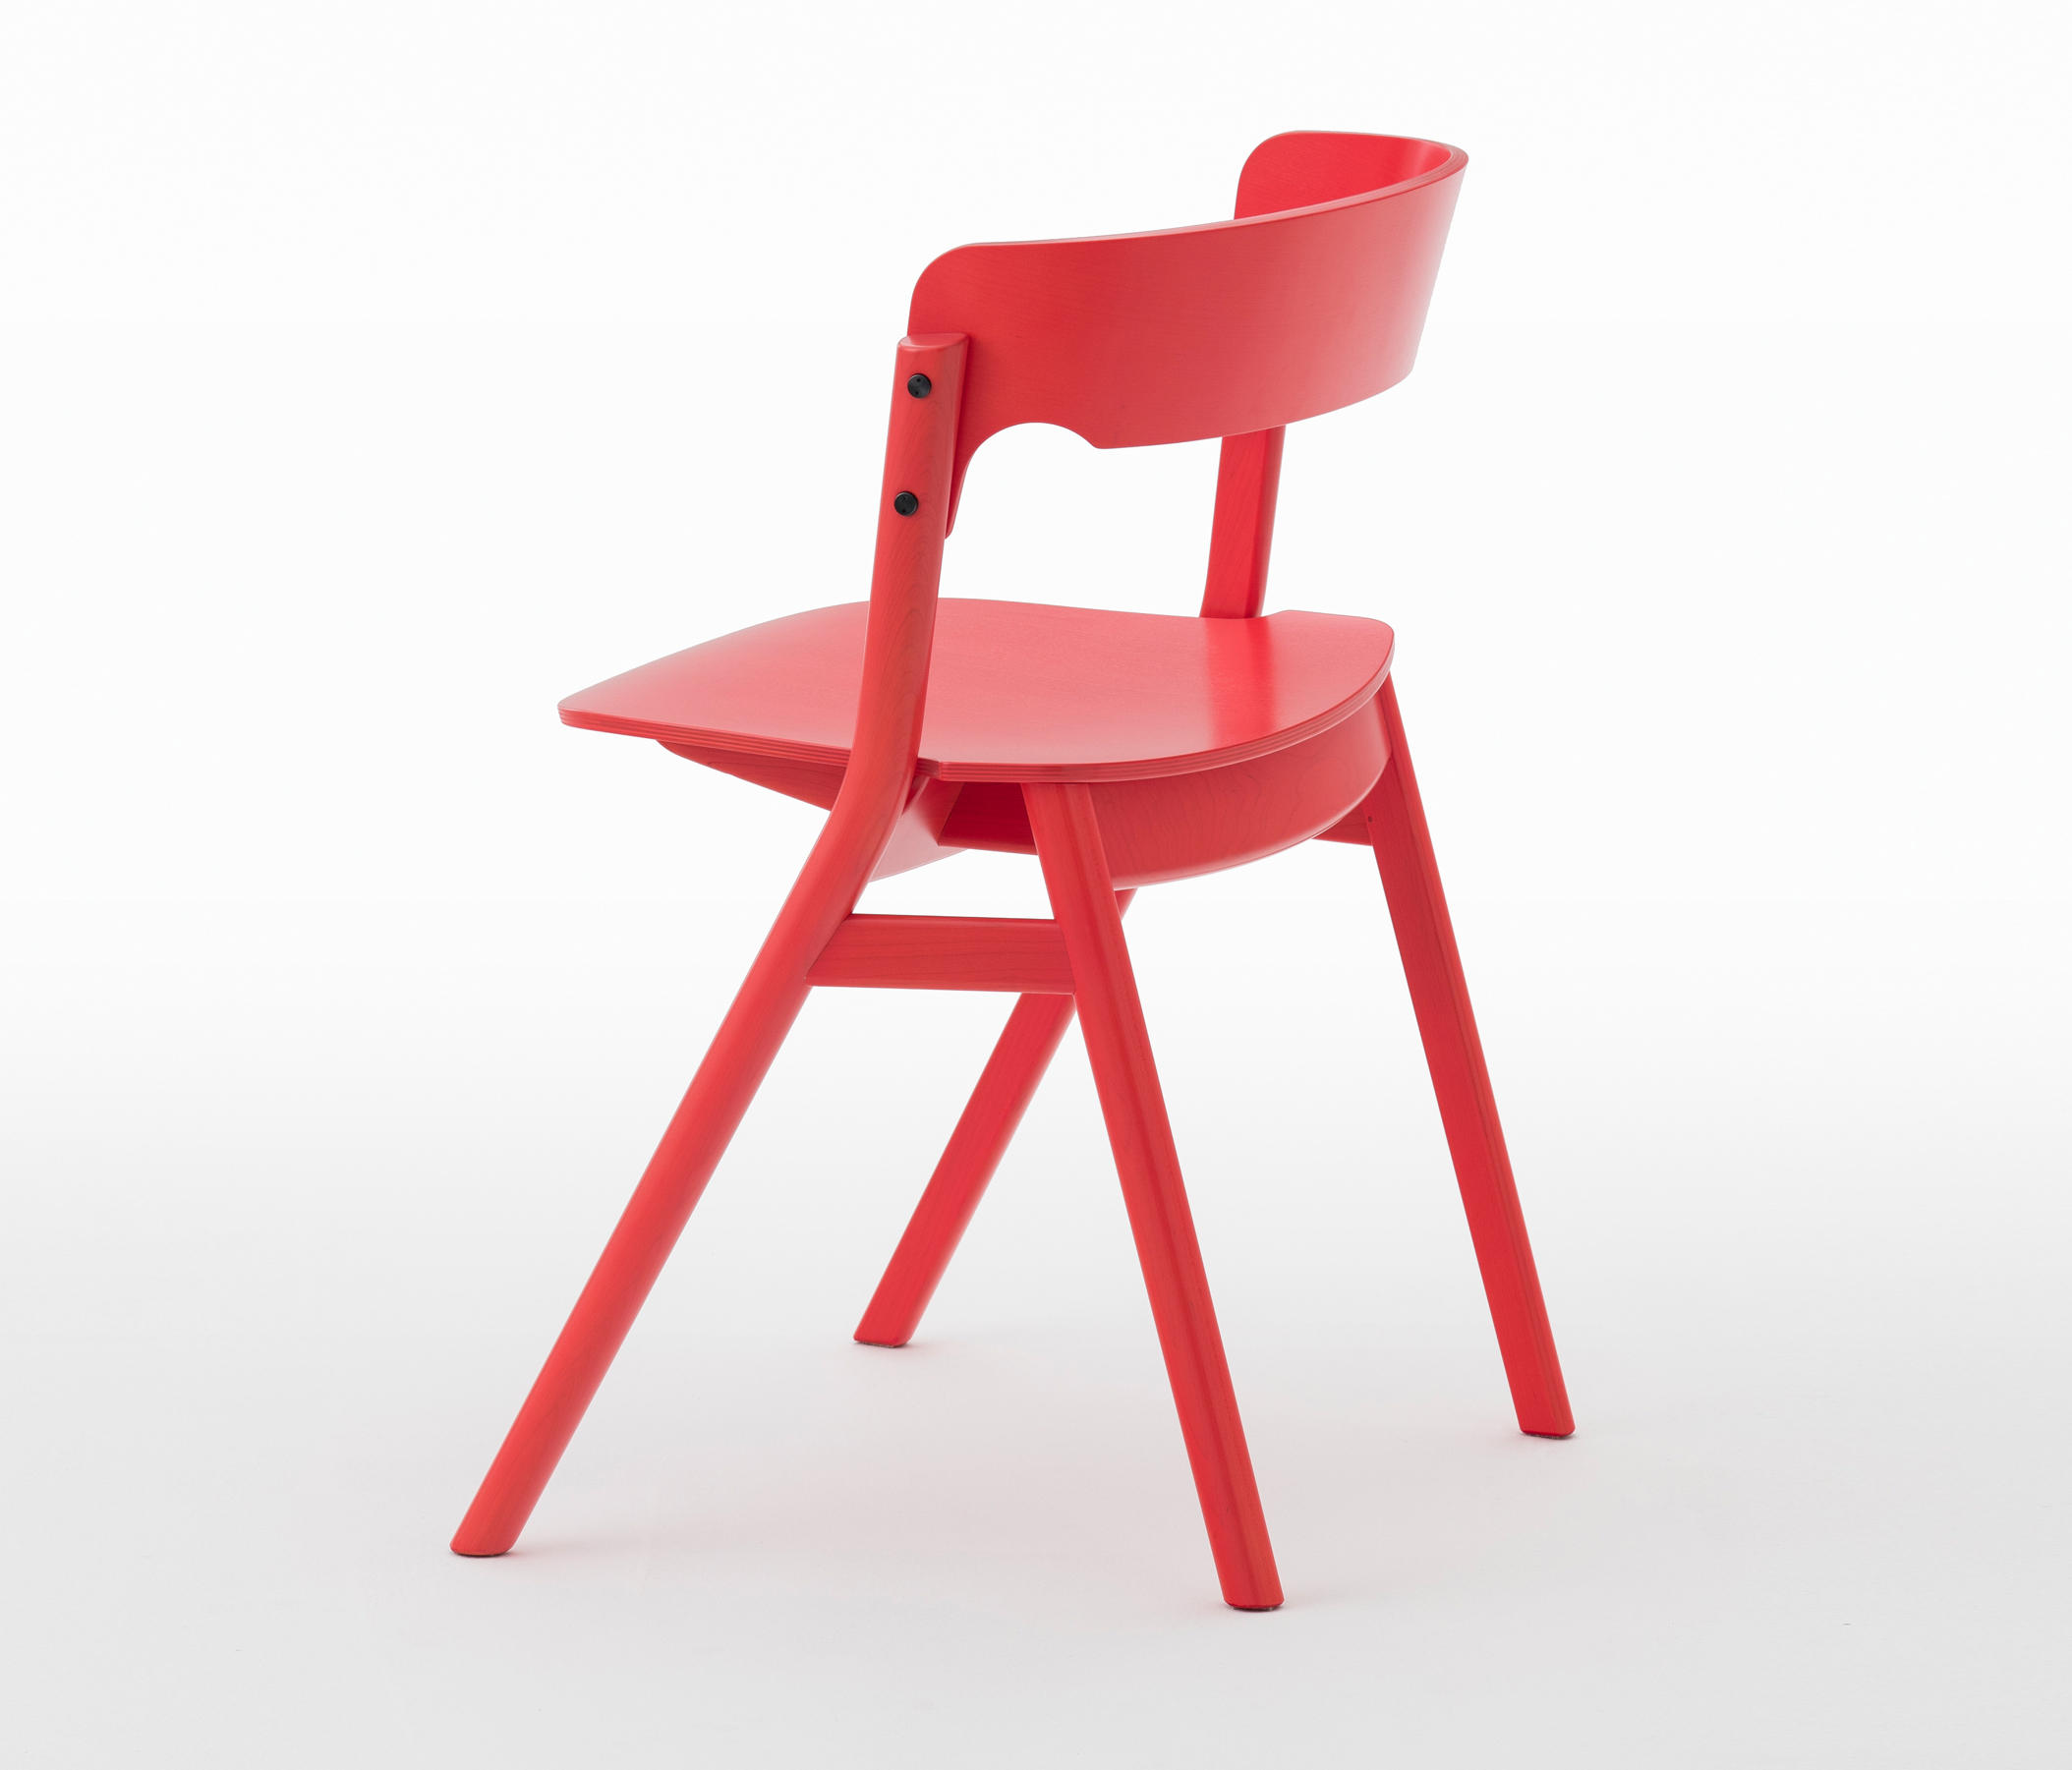 Sally may. Дизайнерские стулья тонкой опоре. Стулья Red Apple\. Стул Red Apple r465.